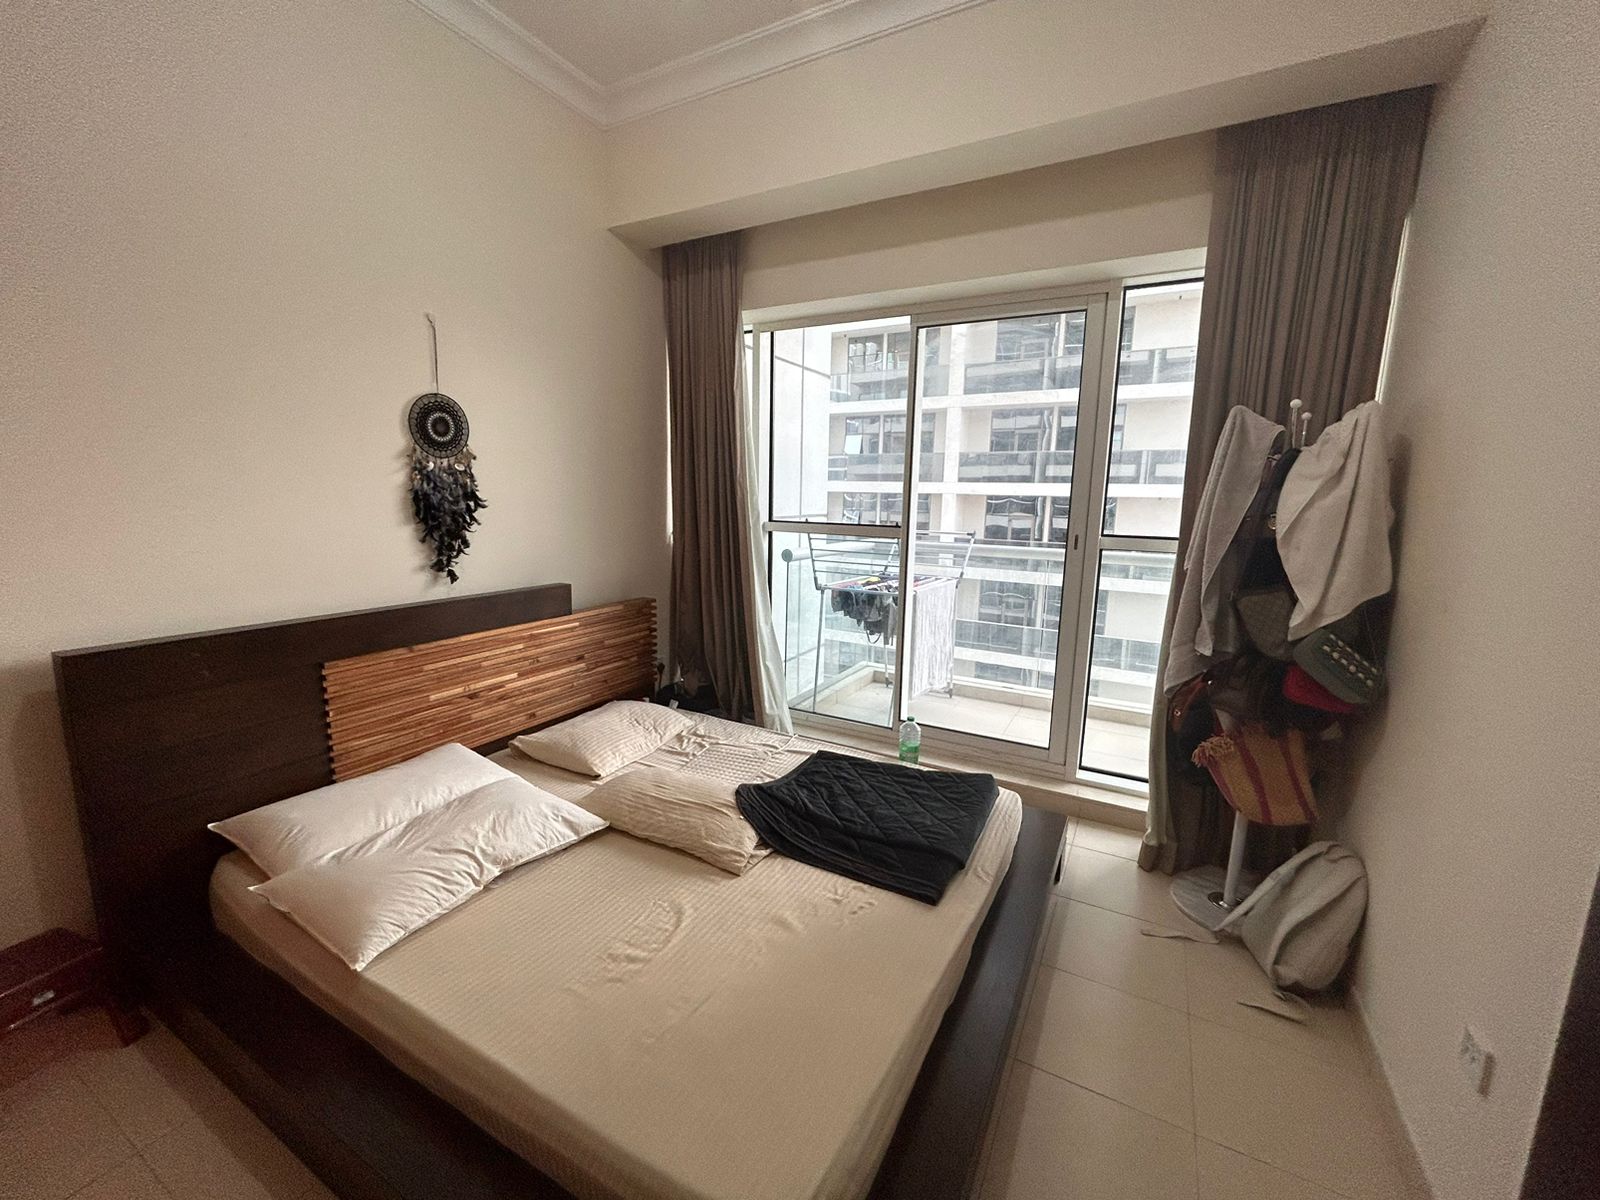 Investment Oppurtunity 1 Bedroom Apartment Business Bay Dubai